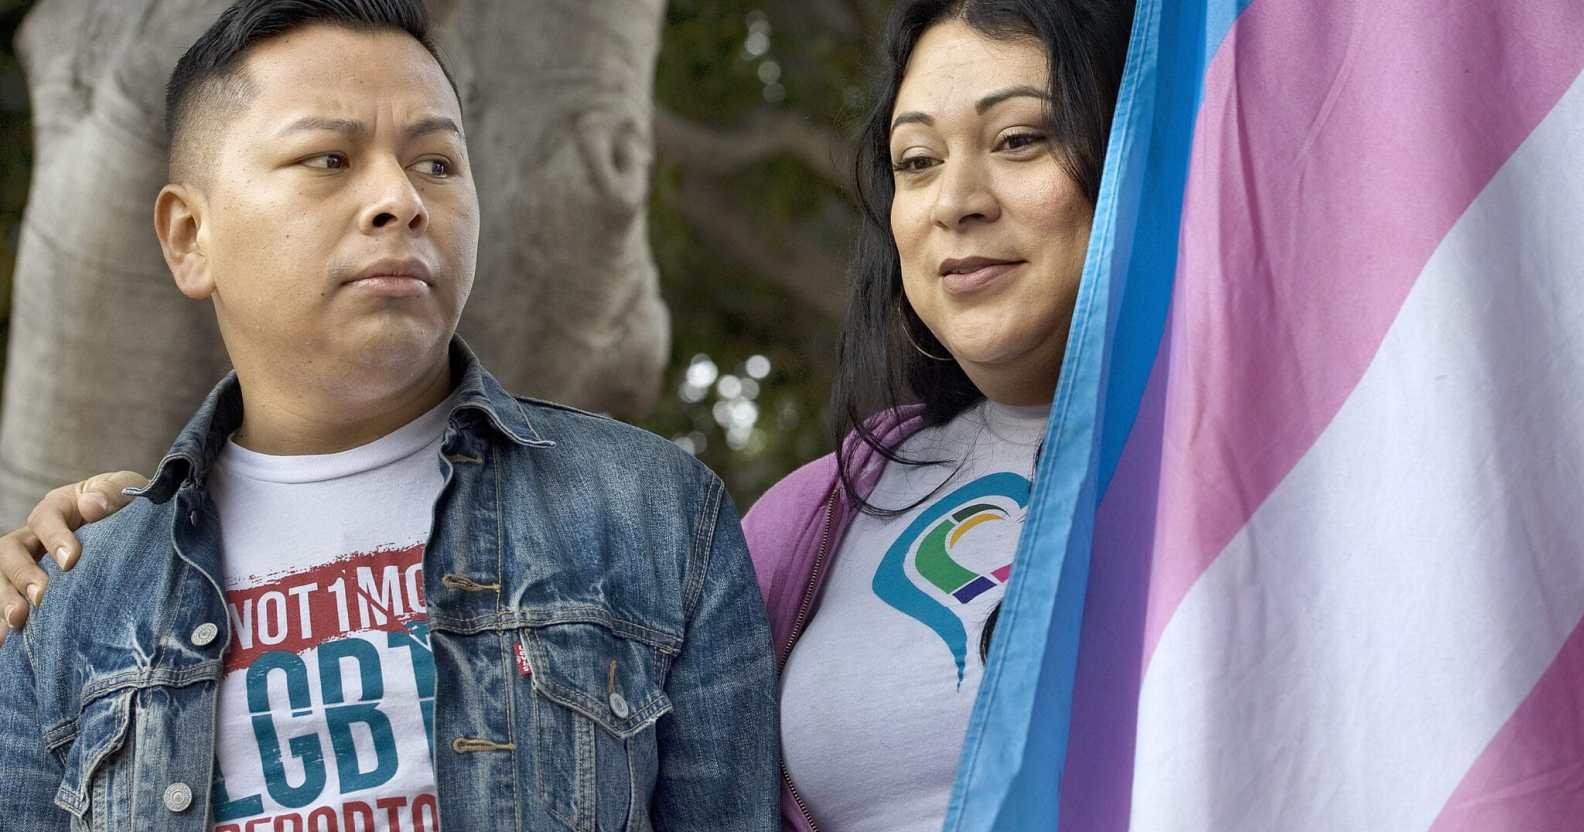 Jennicet Gutiérrez drapes herself with a trans Pride flag